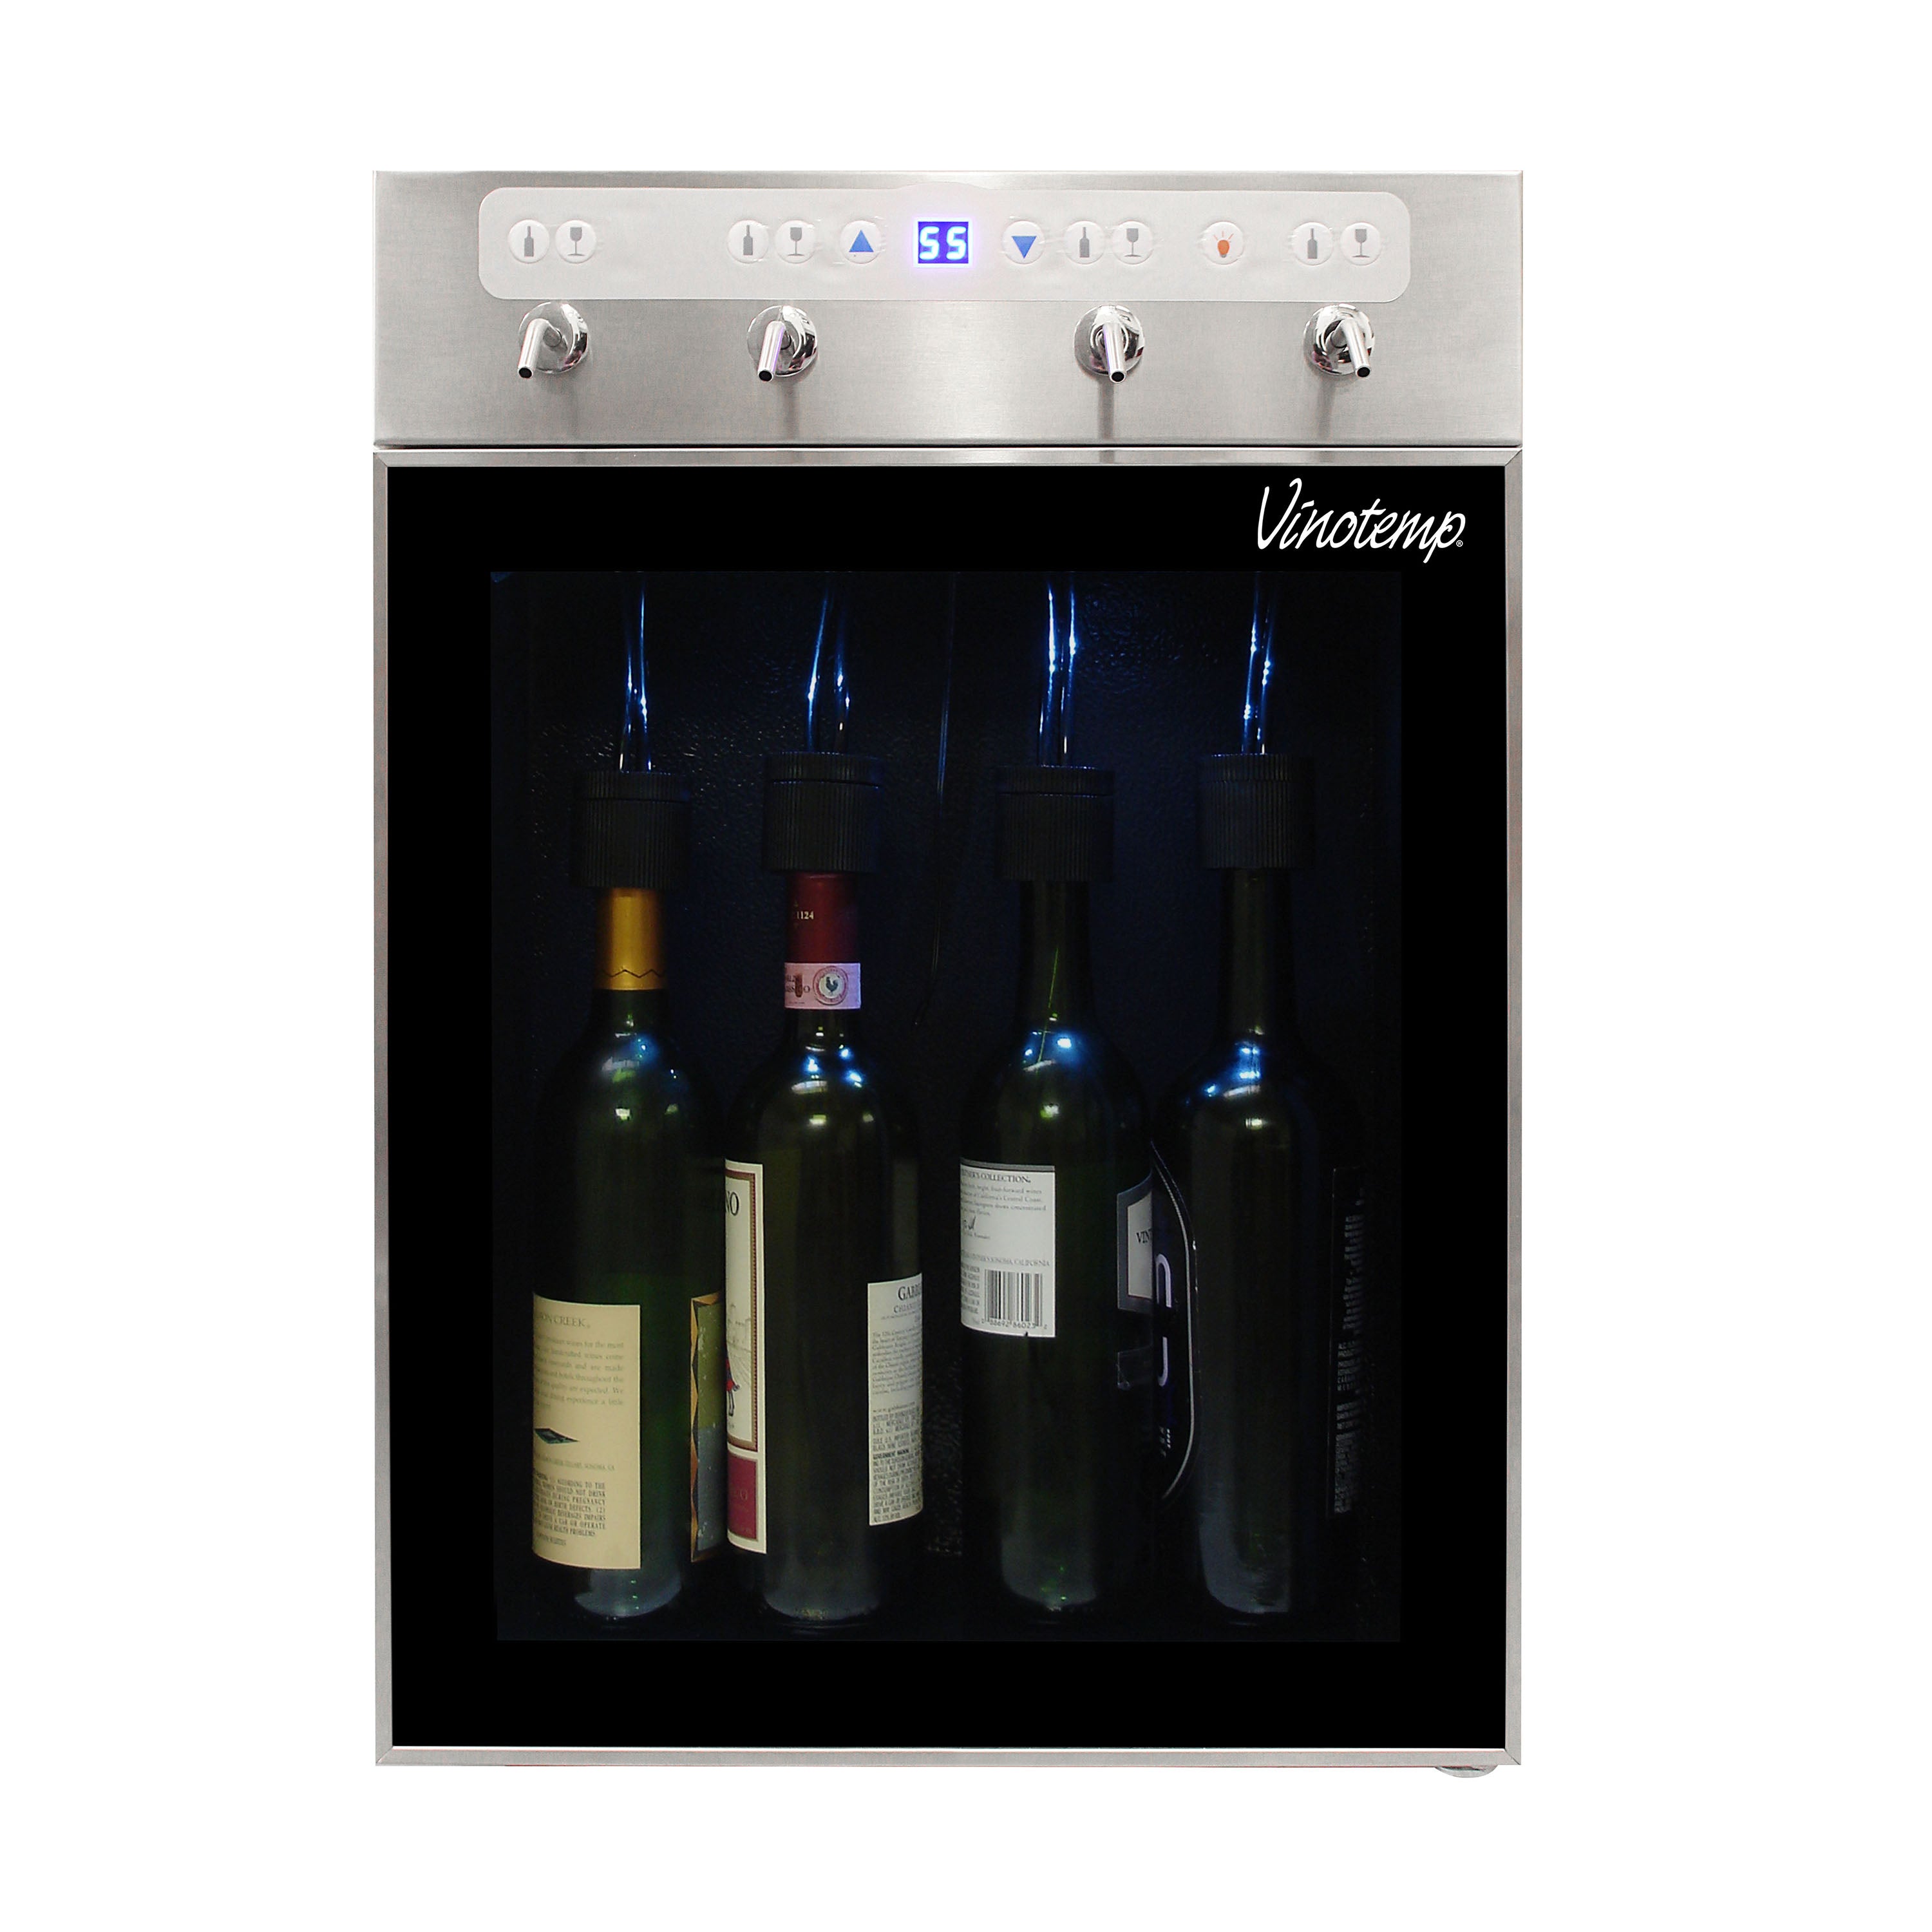 Vinotemp - VT-PRWINEDIS4S, Vinotemp WineSteward Wine Dispenser with Push Button Control, 4 Bottle Capacity, in Stainless Steel